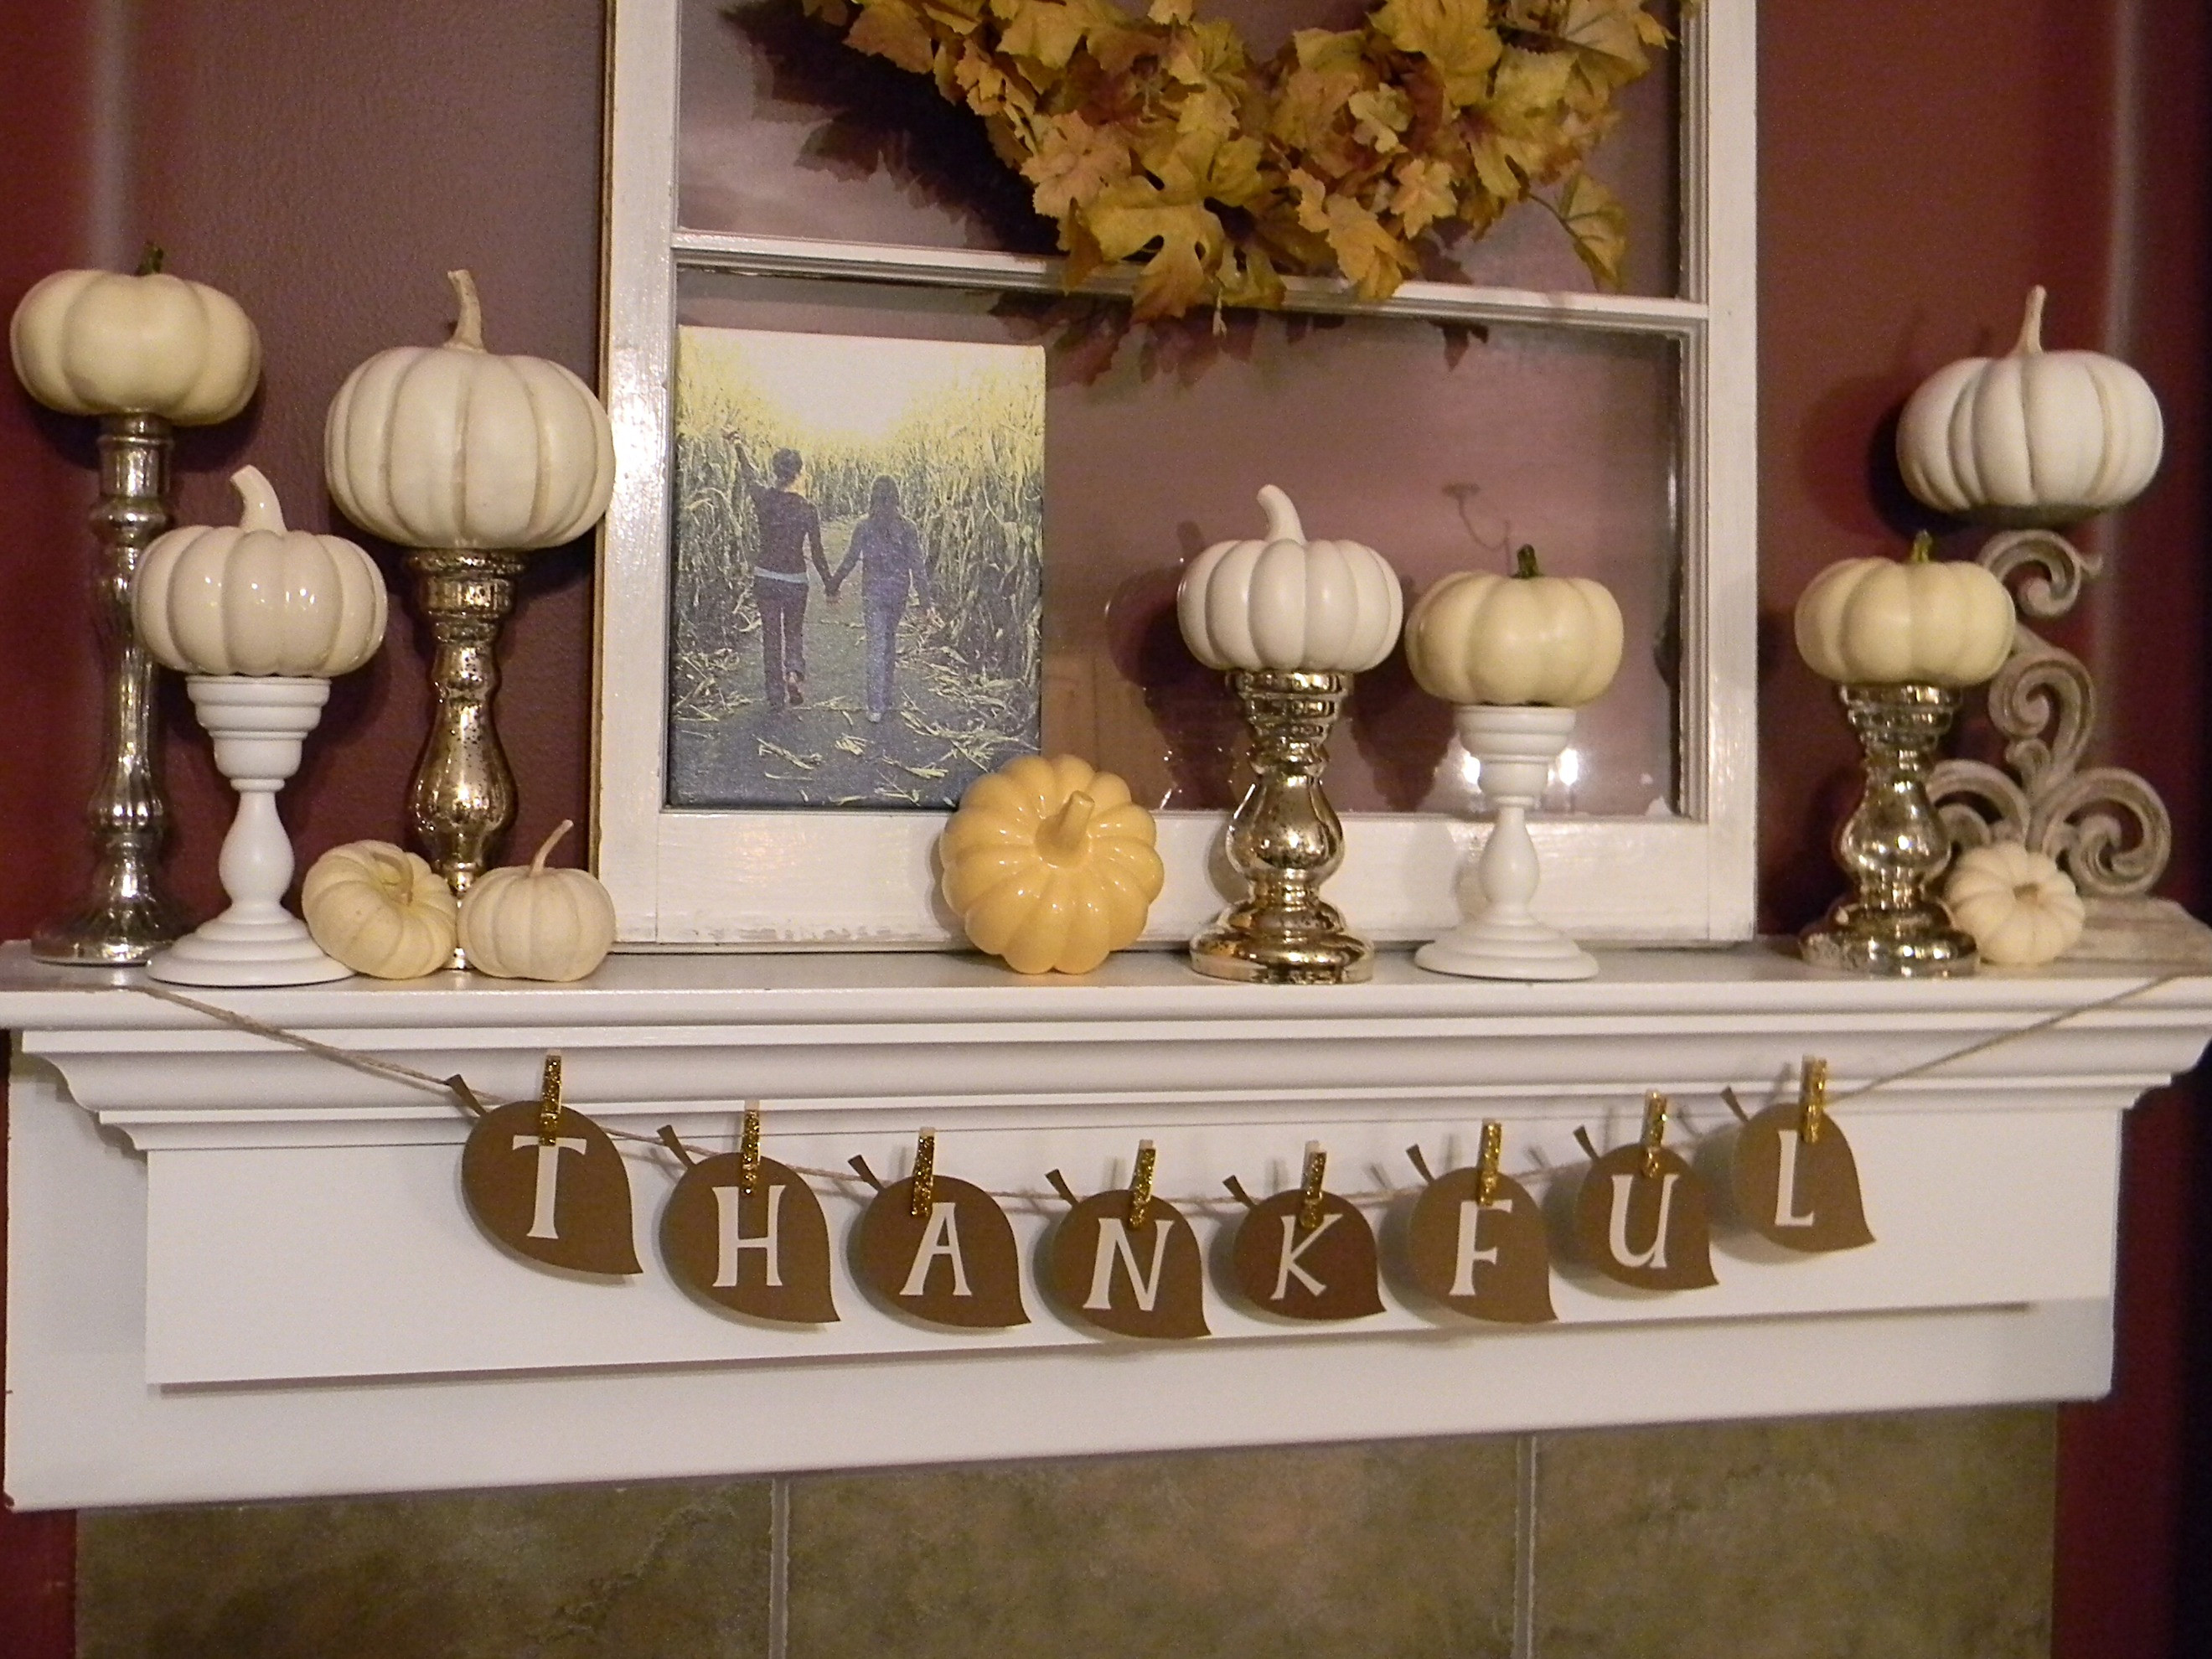 Thanksgiving Home Decor
 Dishfunctional Designs Creative Ideas For Thanksgiving